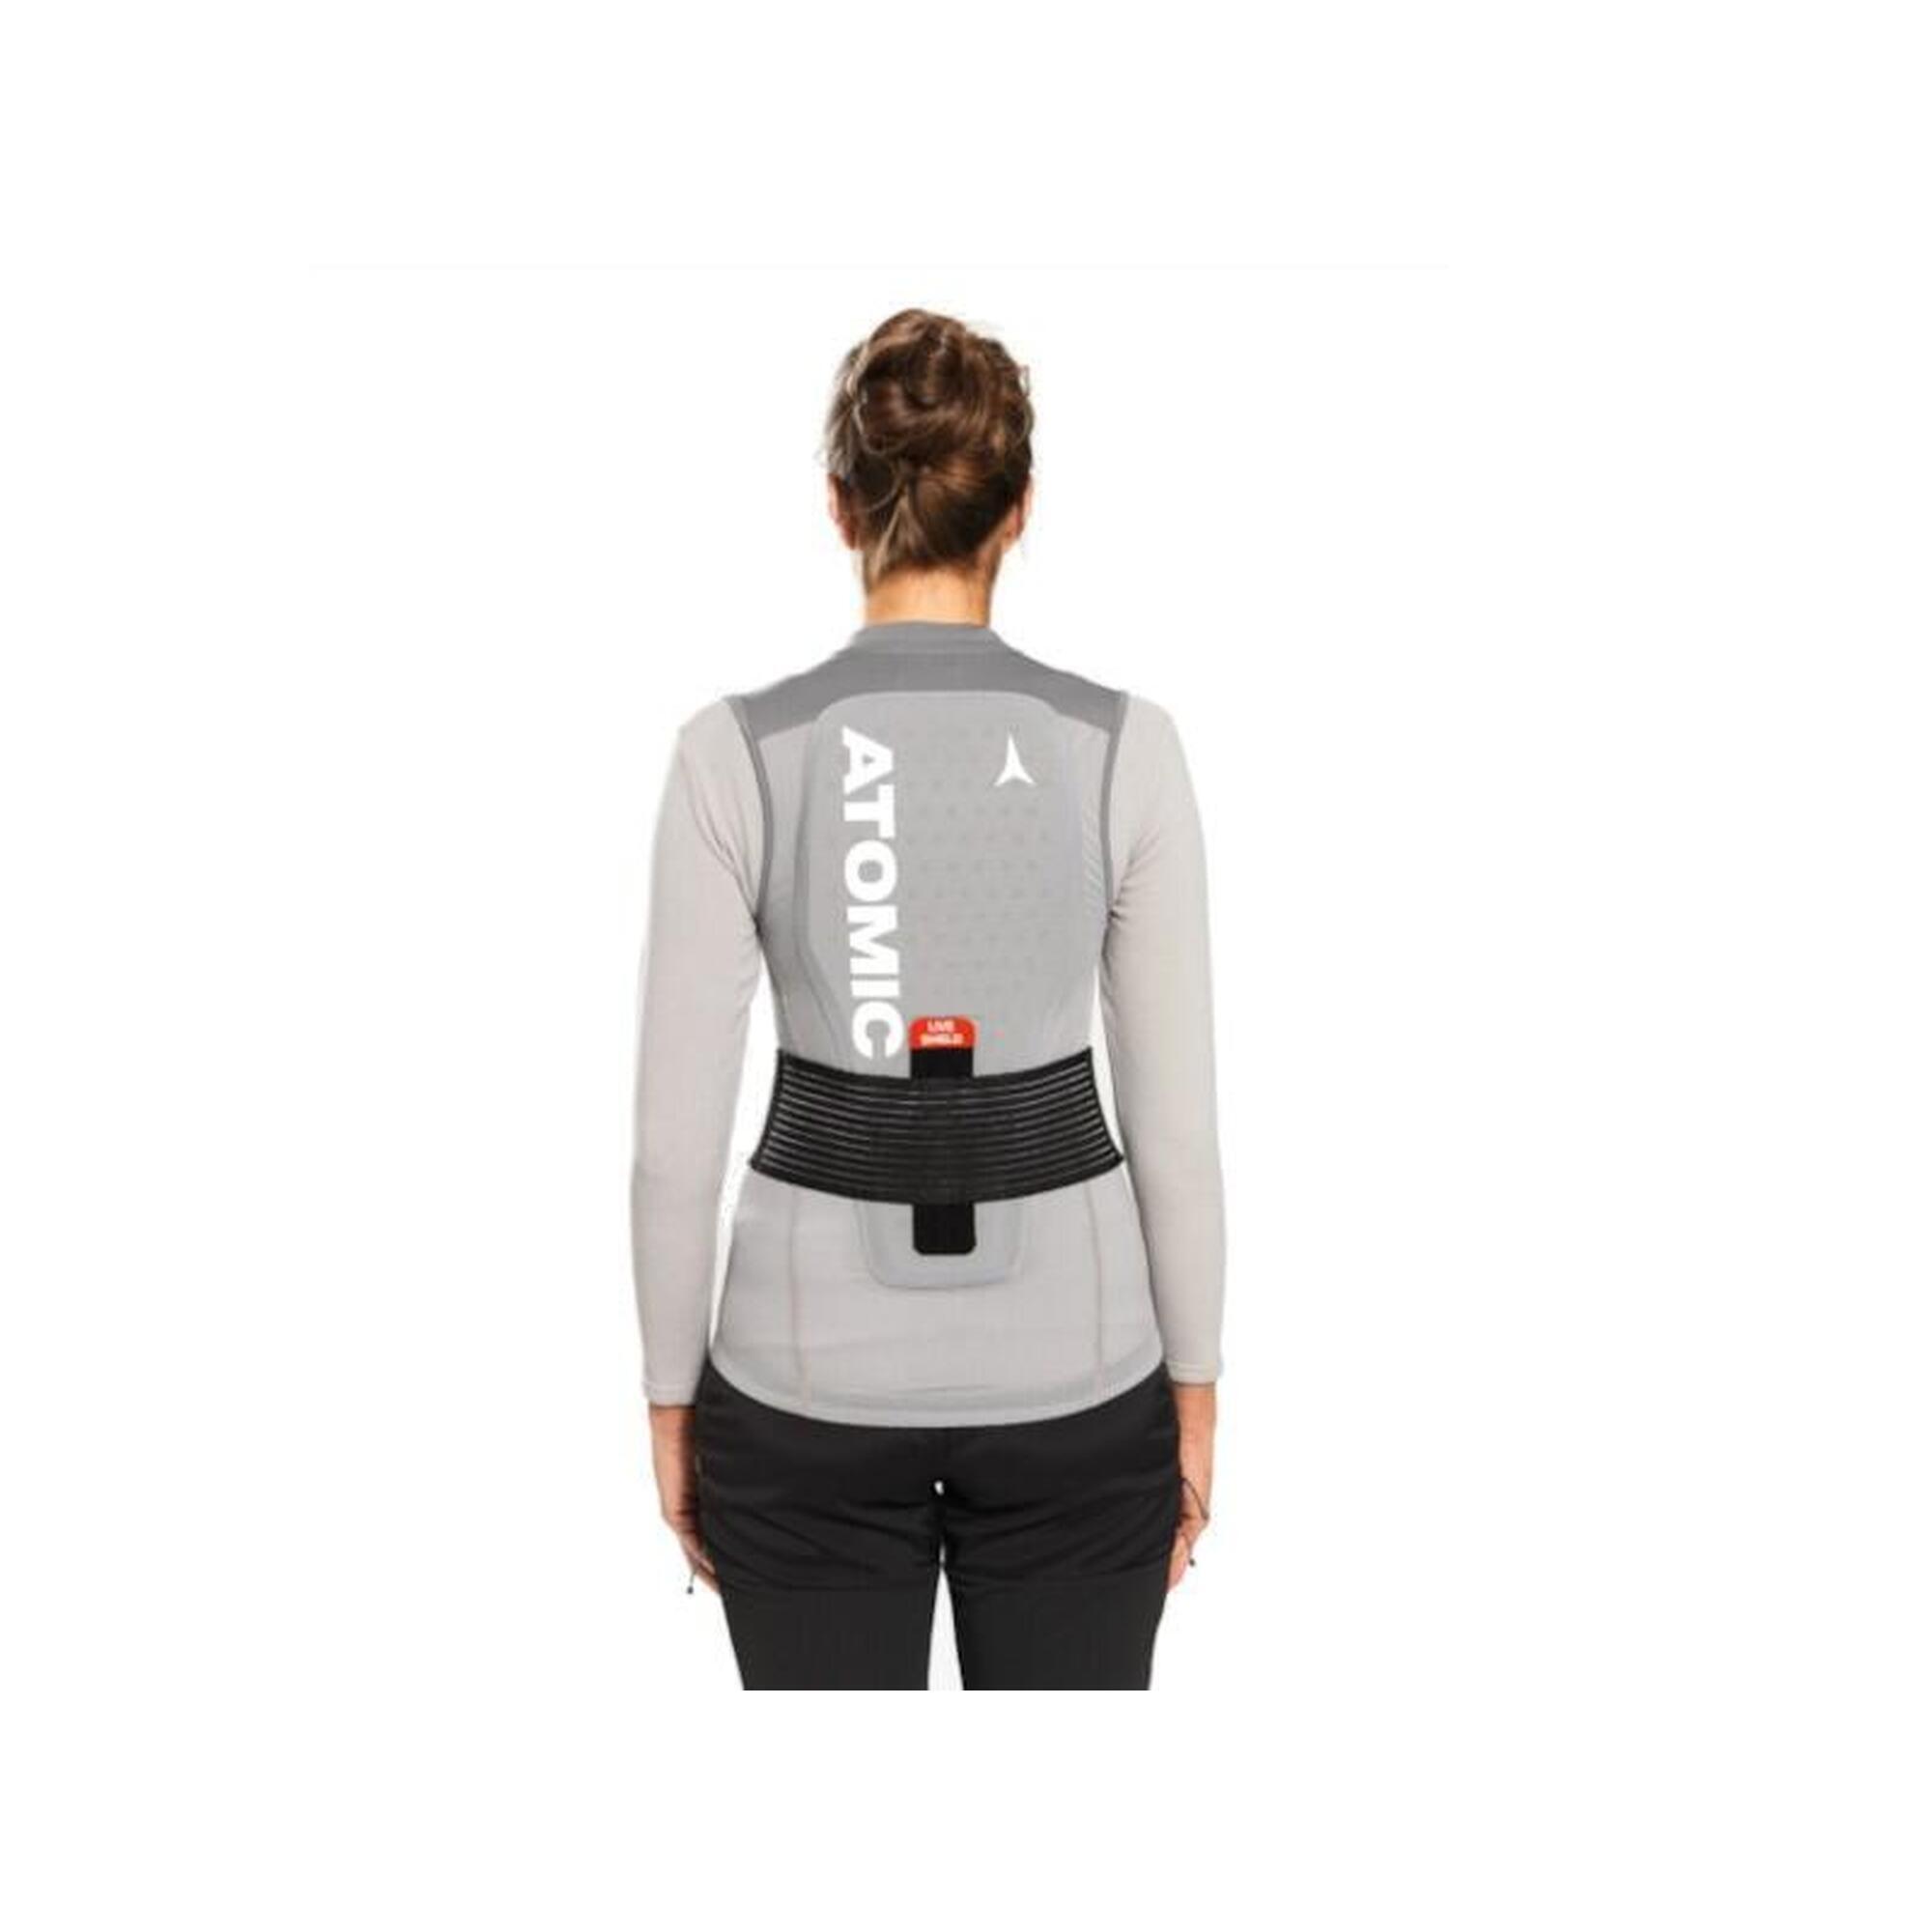 Kamizelka ochronna Atomic Live Shield Vest W Grey 2024